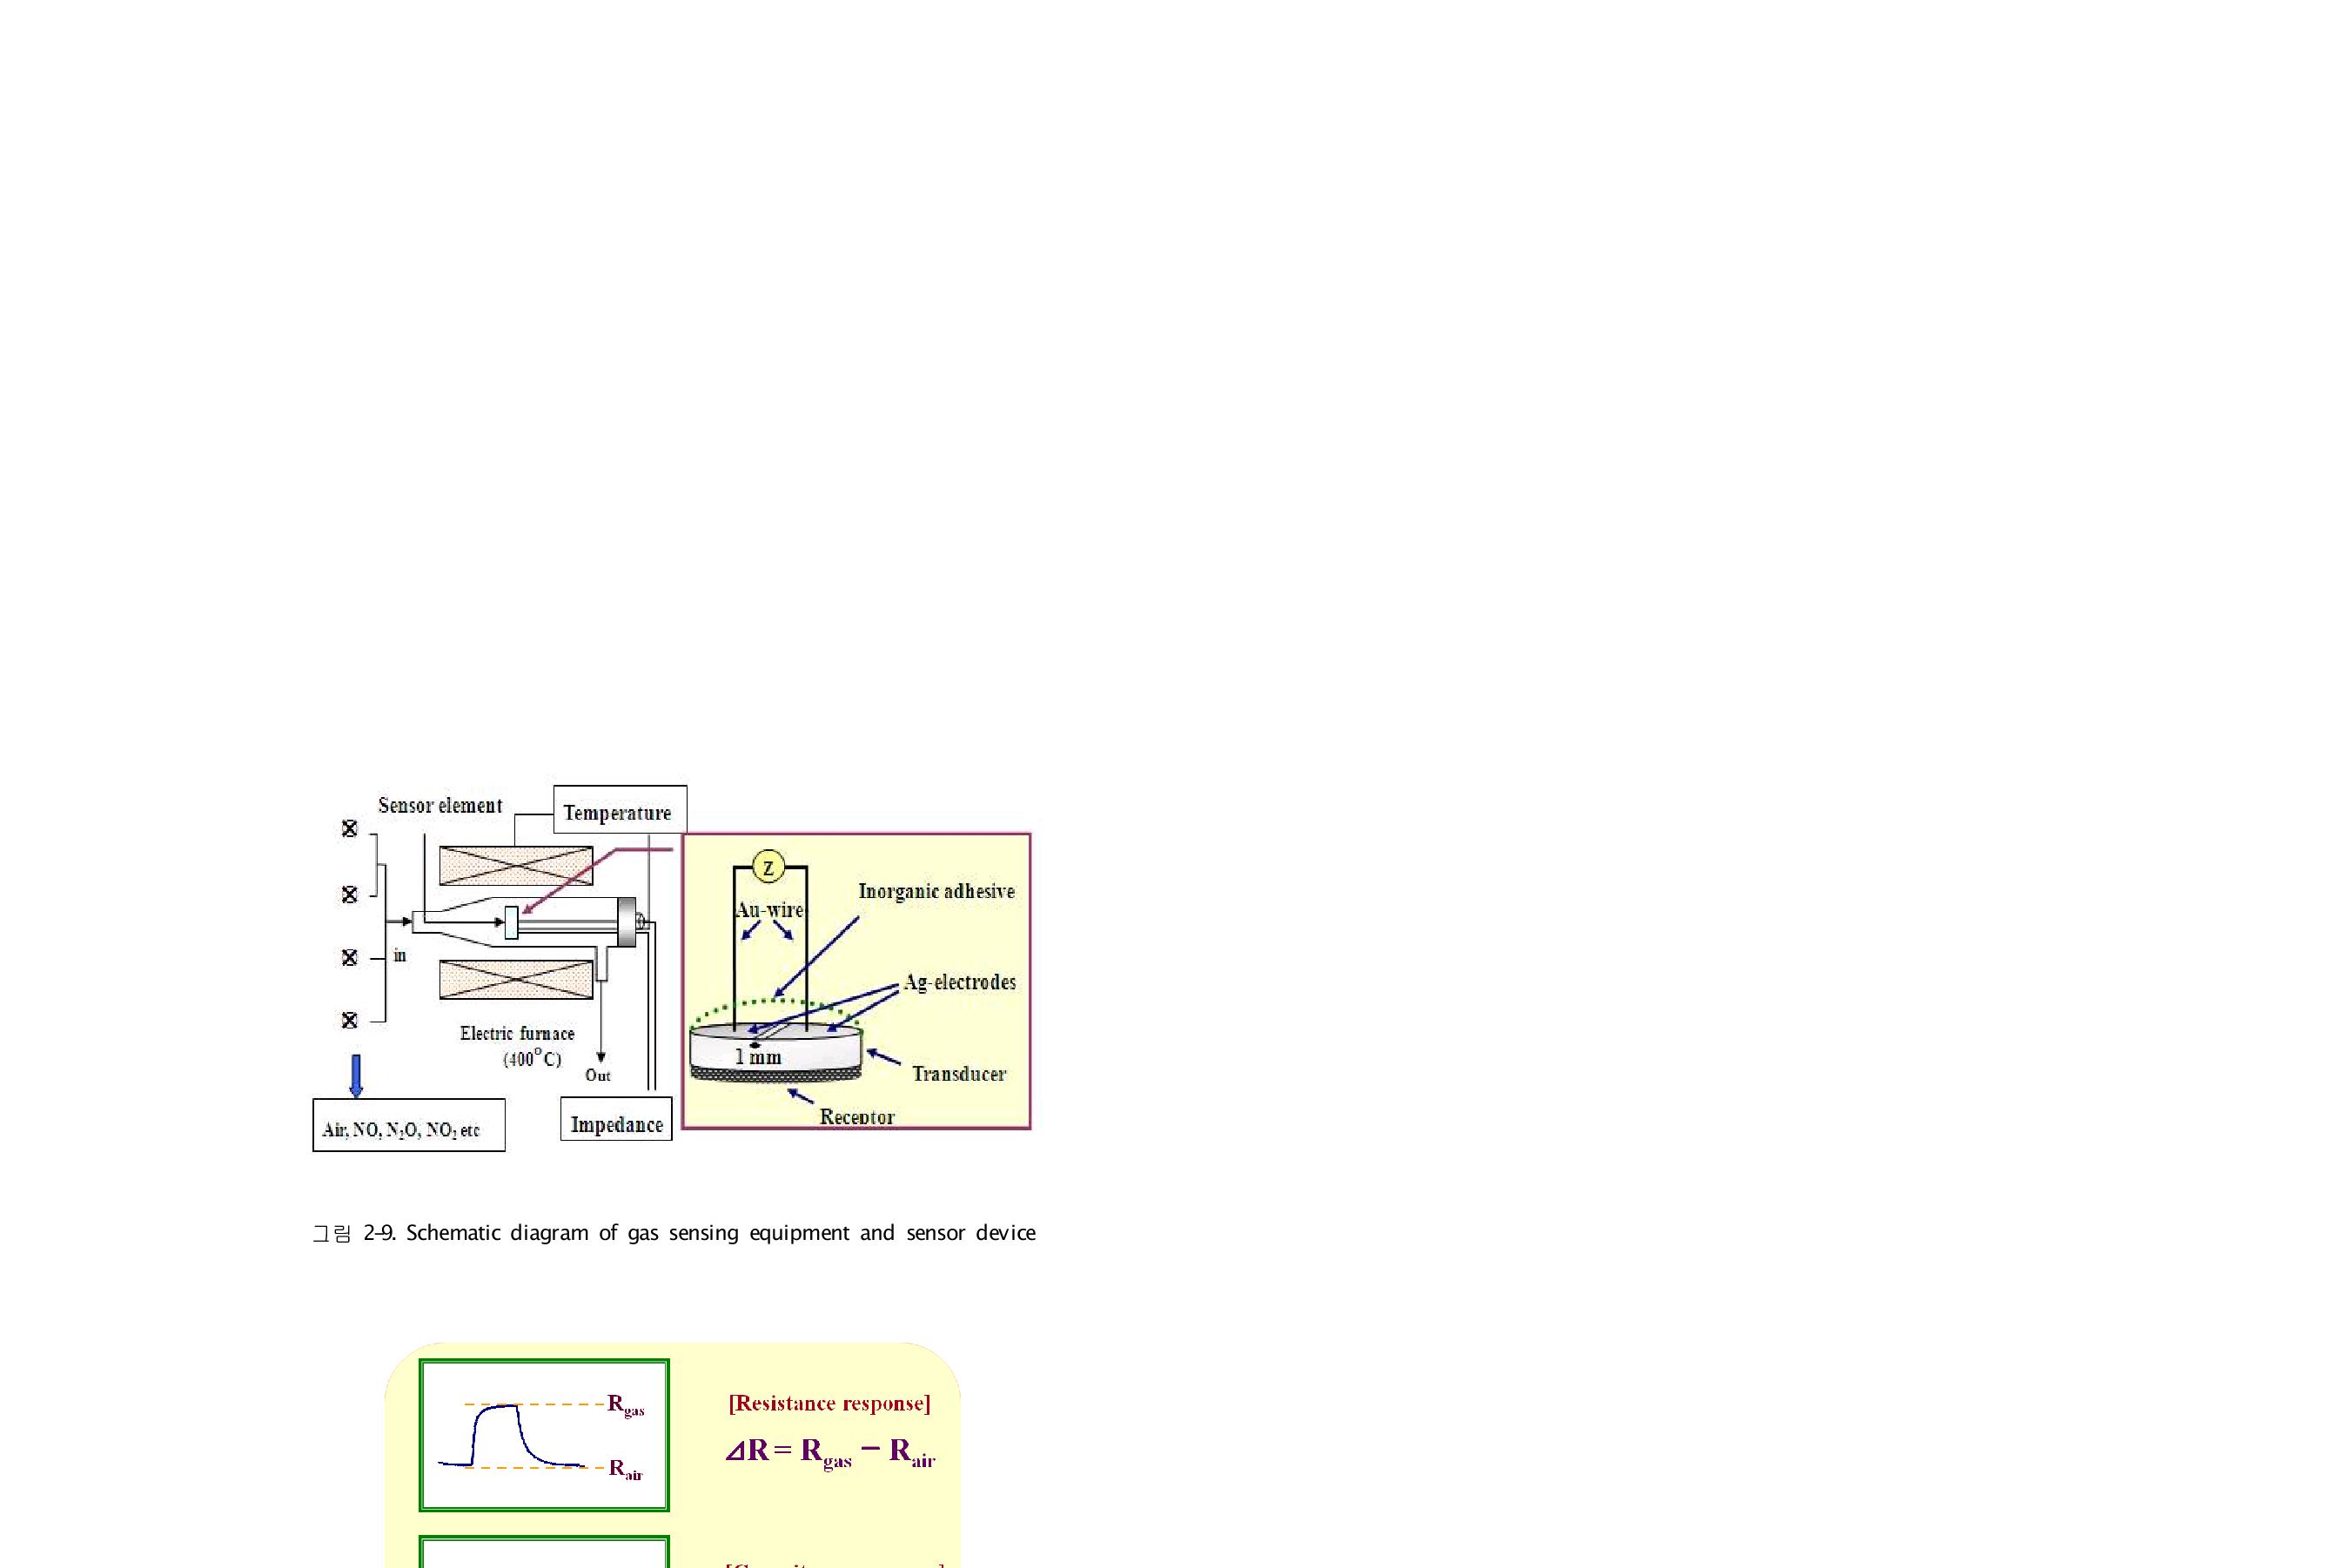 Schematic diagram of gas sensing equipment and sensor device